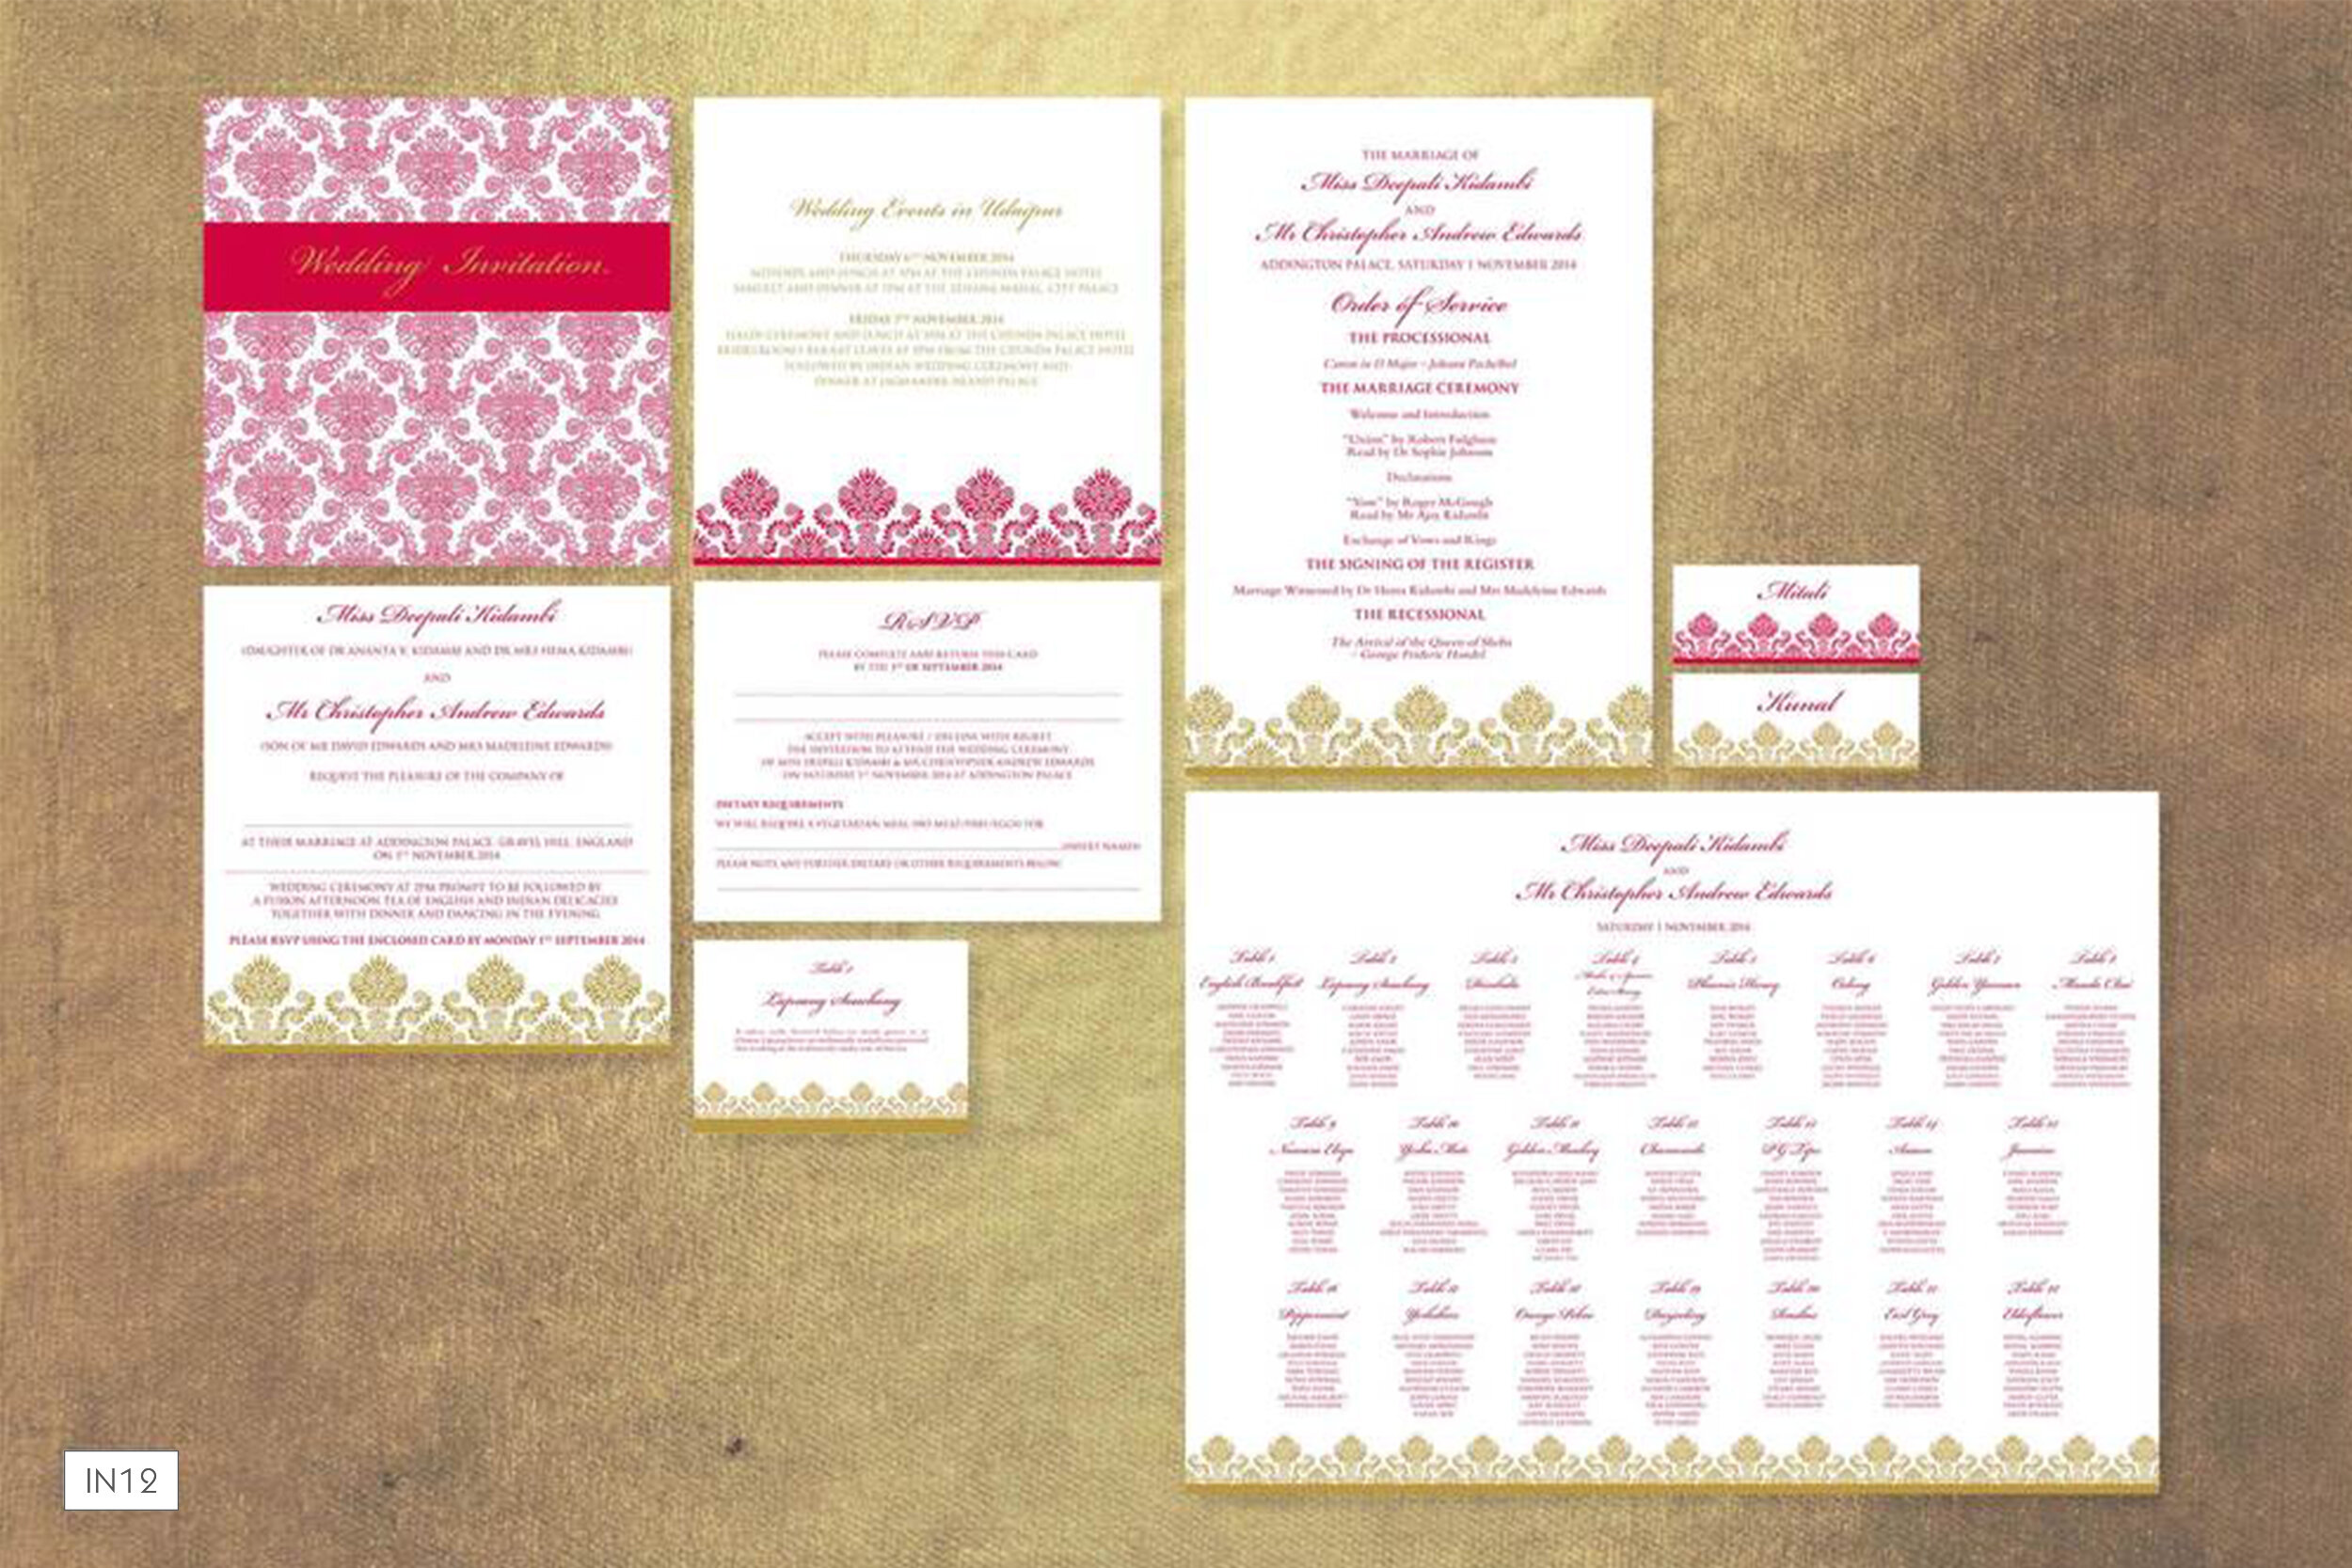 india-inspired-wedding-invitation-stationery-set-IN12_ananyacards.com.jpg